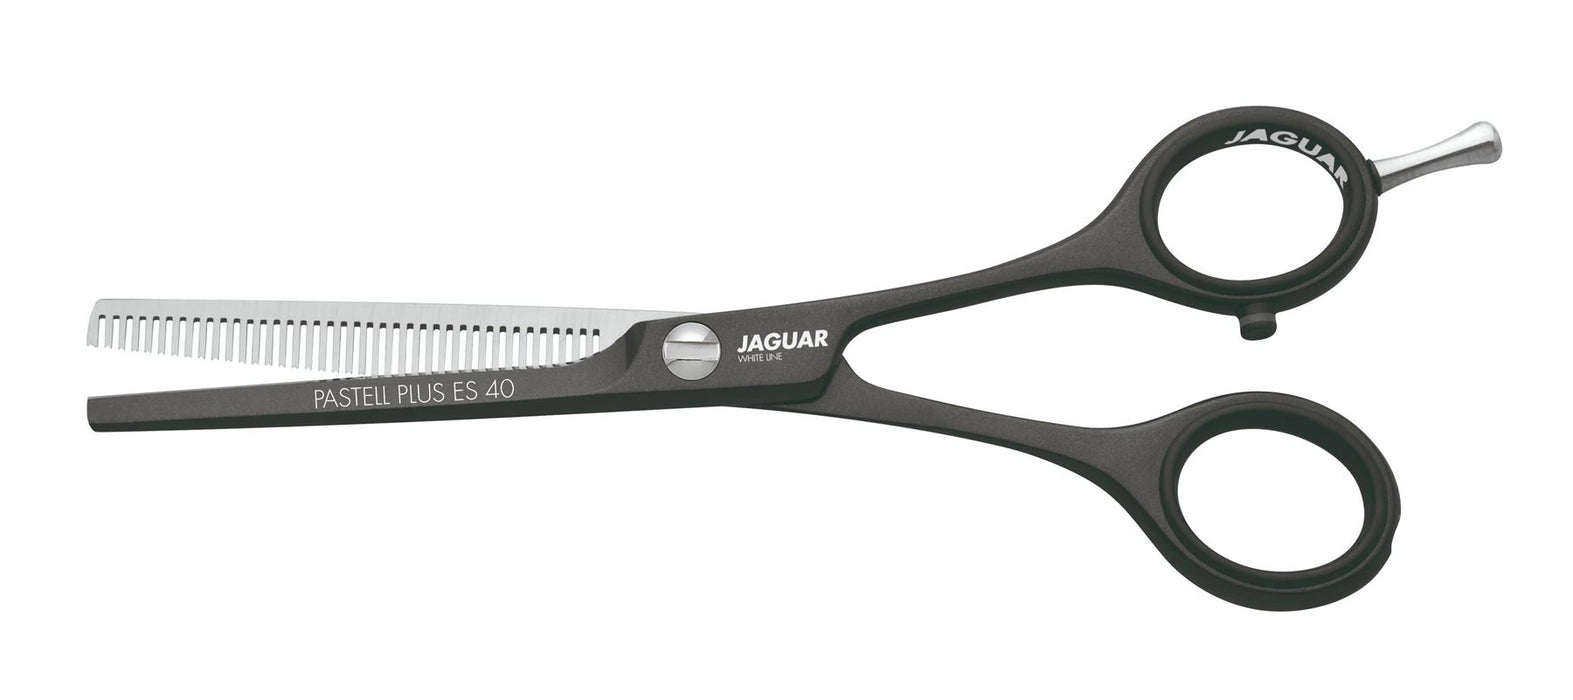 Jaguar Pastell Hairdressing 5" thinning Scissors - Coated Lava